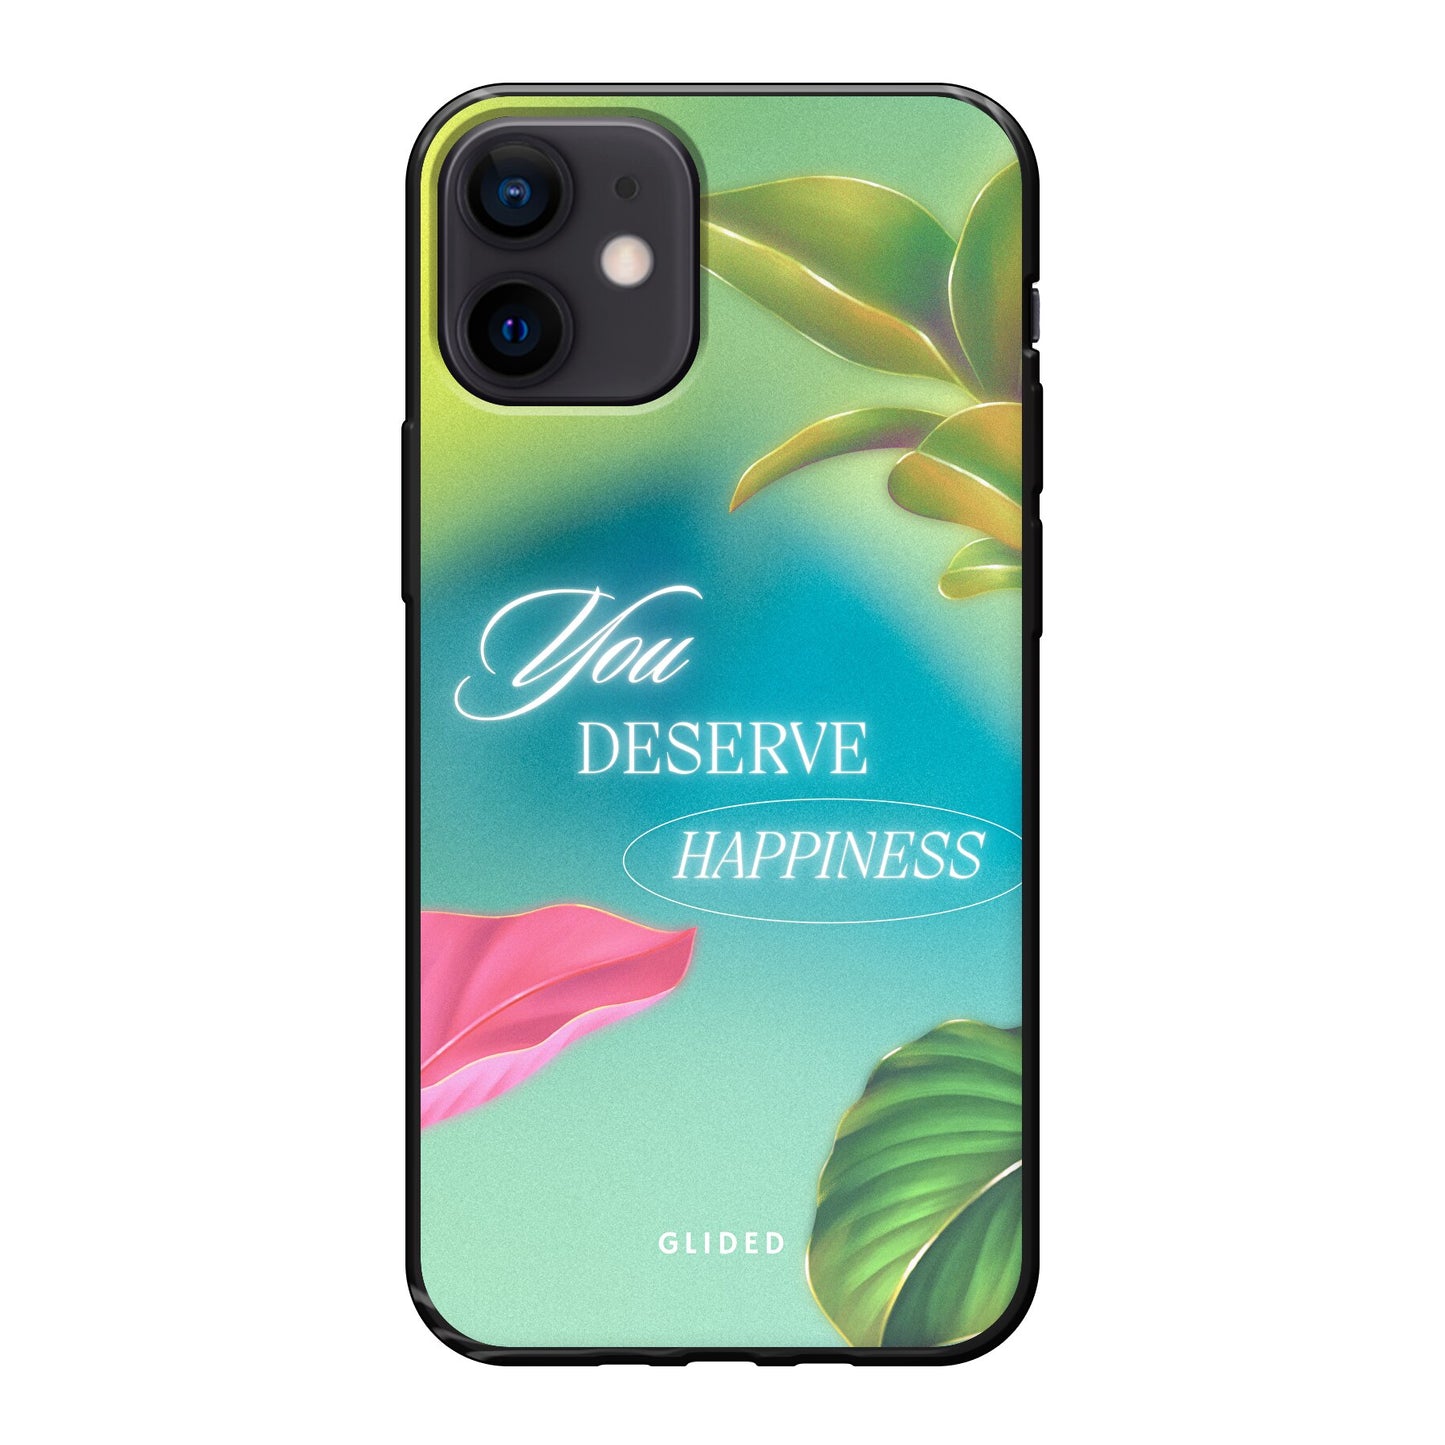 Happiness - iPhone 12 mini - Soft case